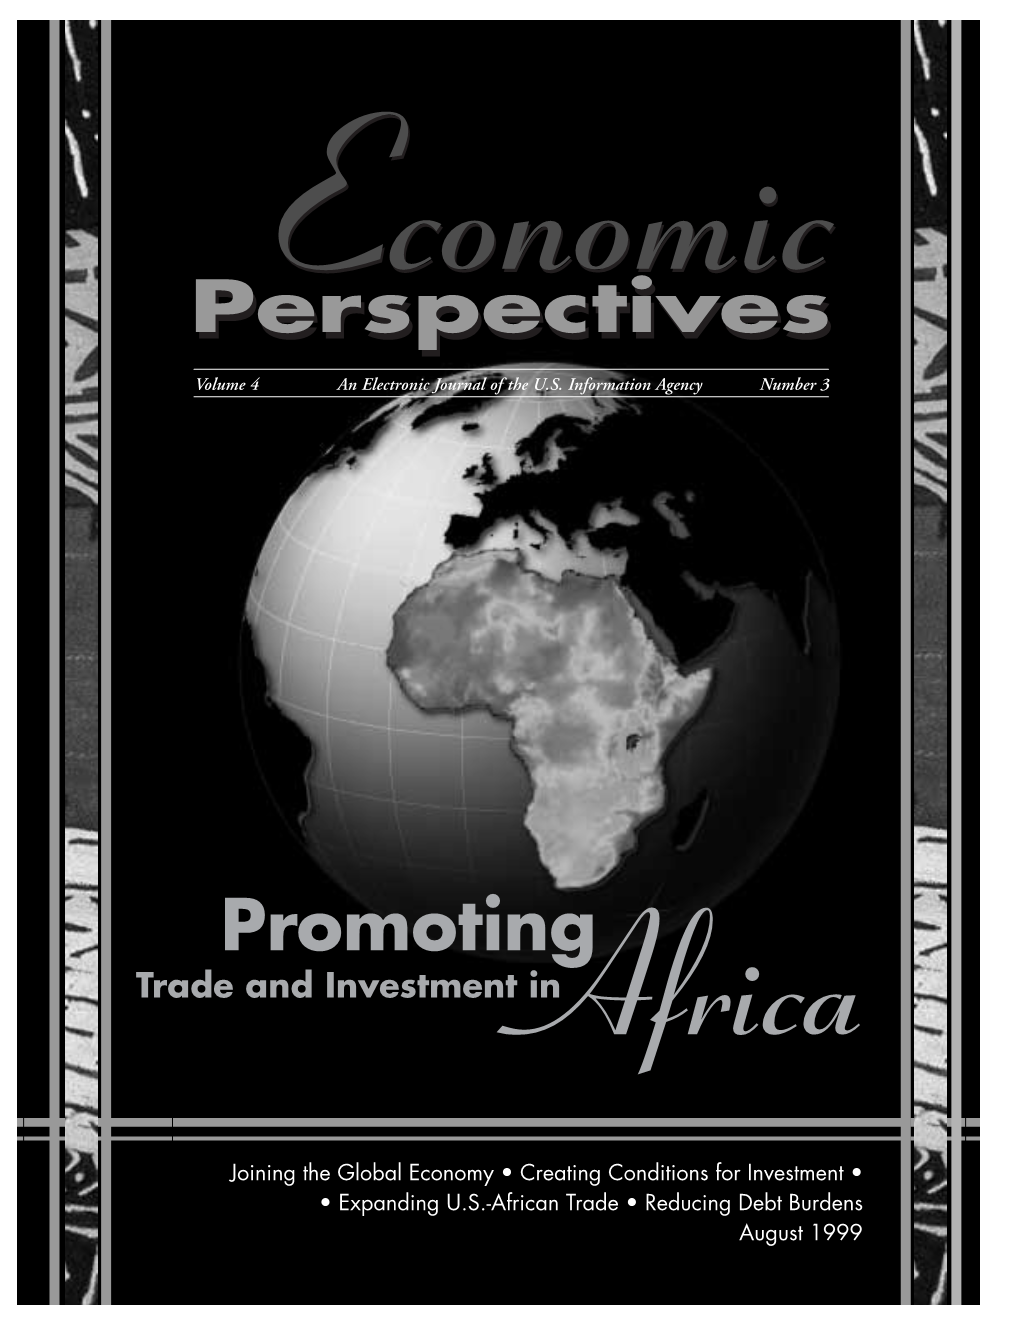 Economic Perspectivesperspectives